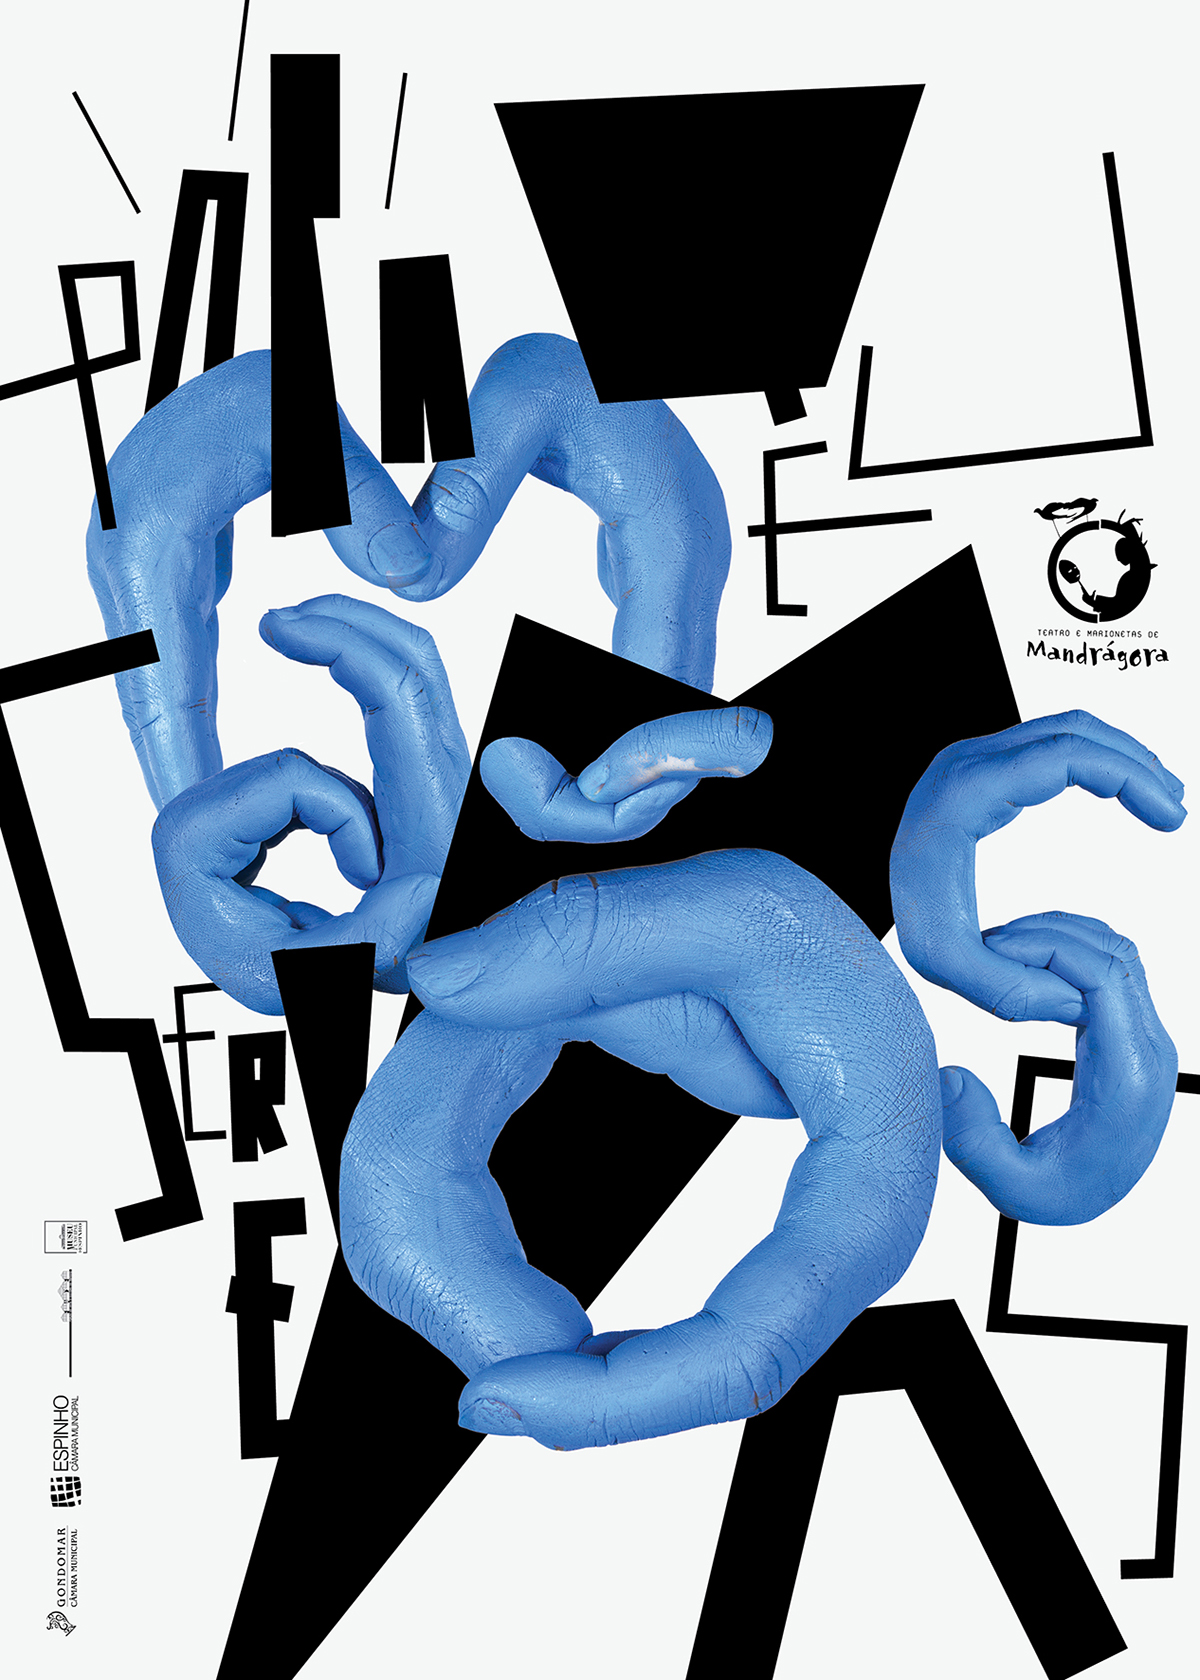 atelier d'alves poster hand-made blue hands porto Portugal Theatre